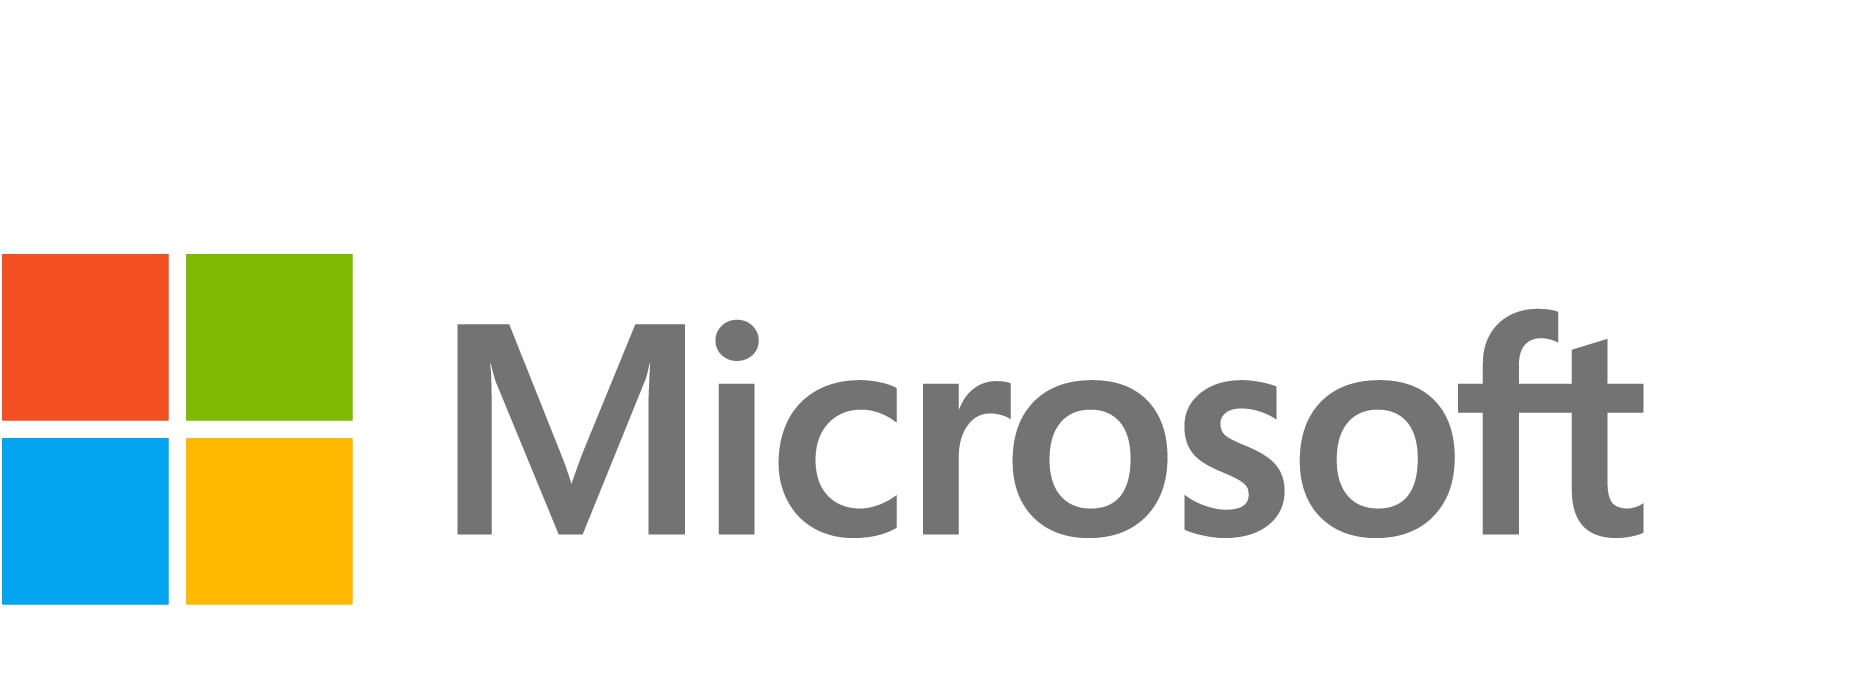 Microsoft Dynamics 365 Sales Enterprise Edition - subscription license (1 y